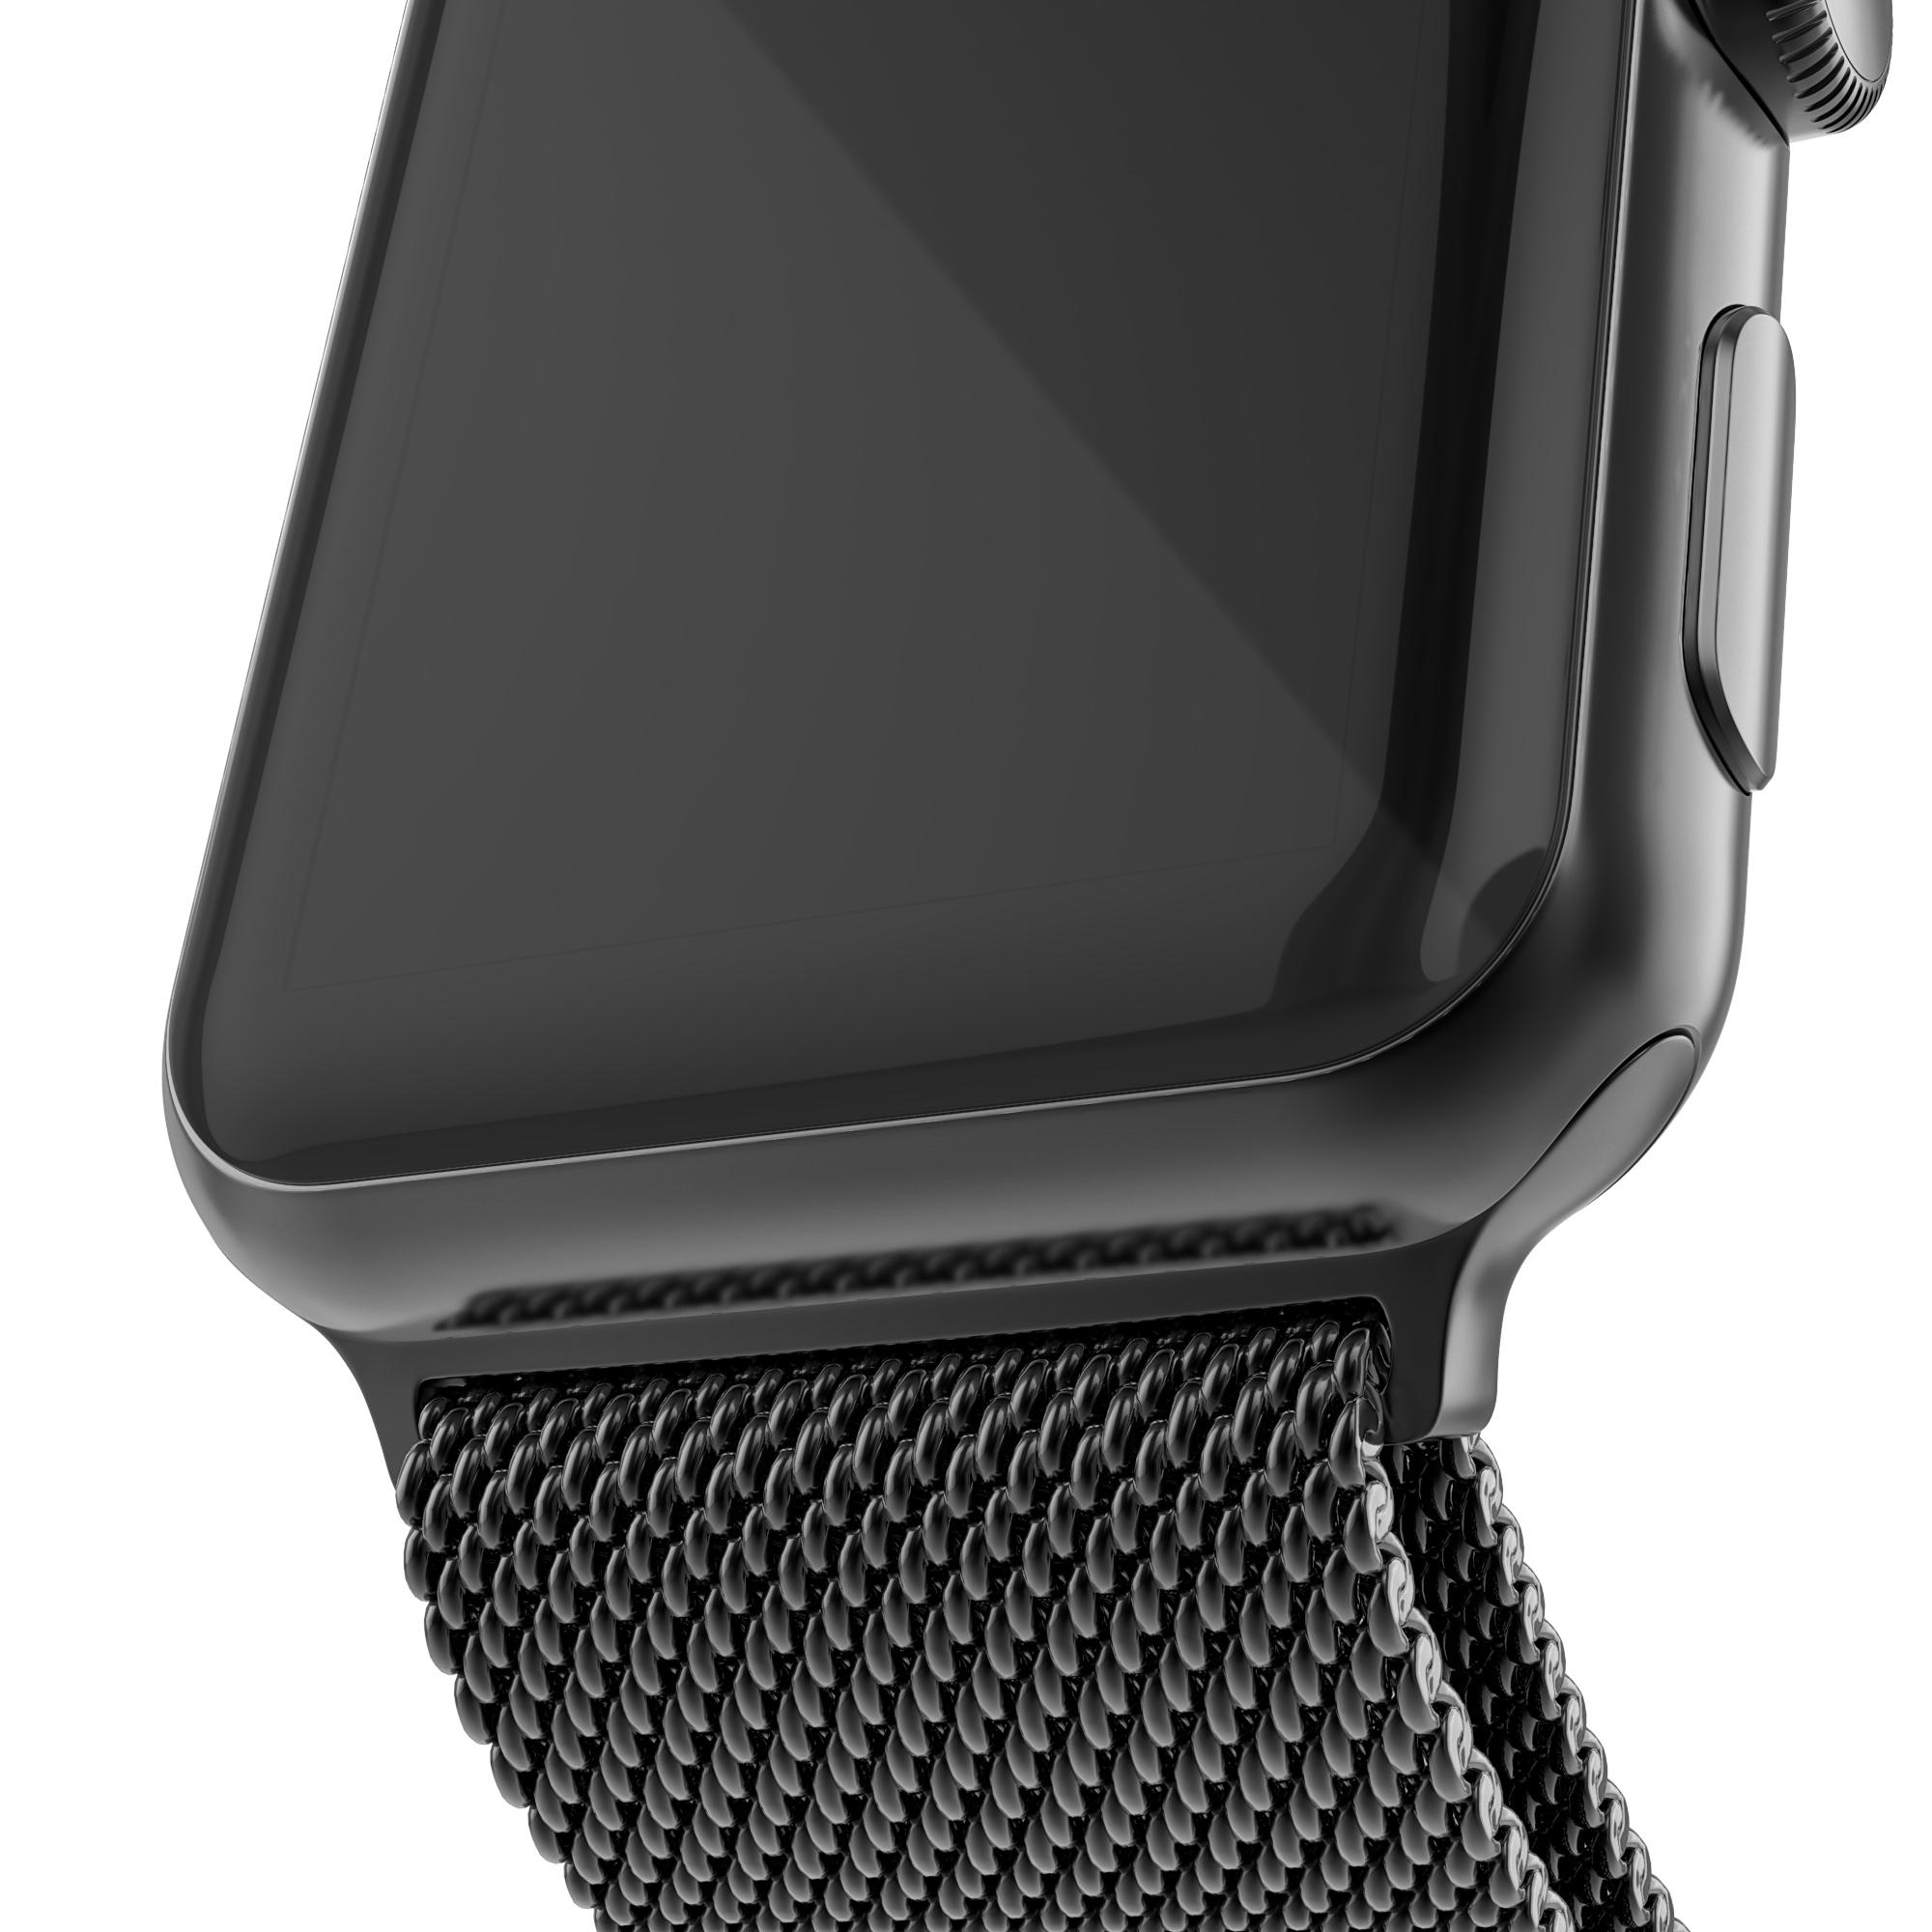 Bracelet milanais Apple Watch Ultra (noir) 